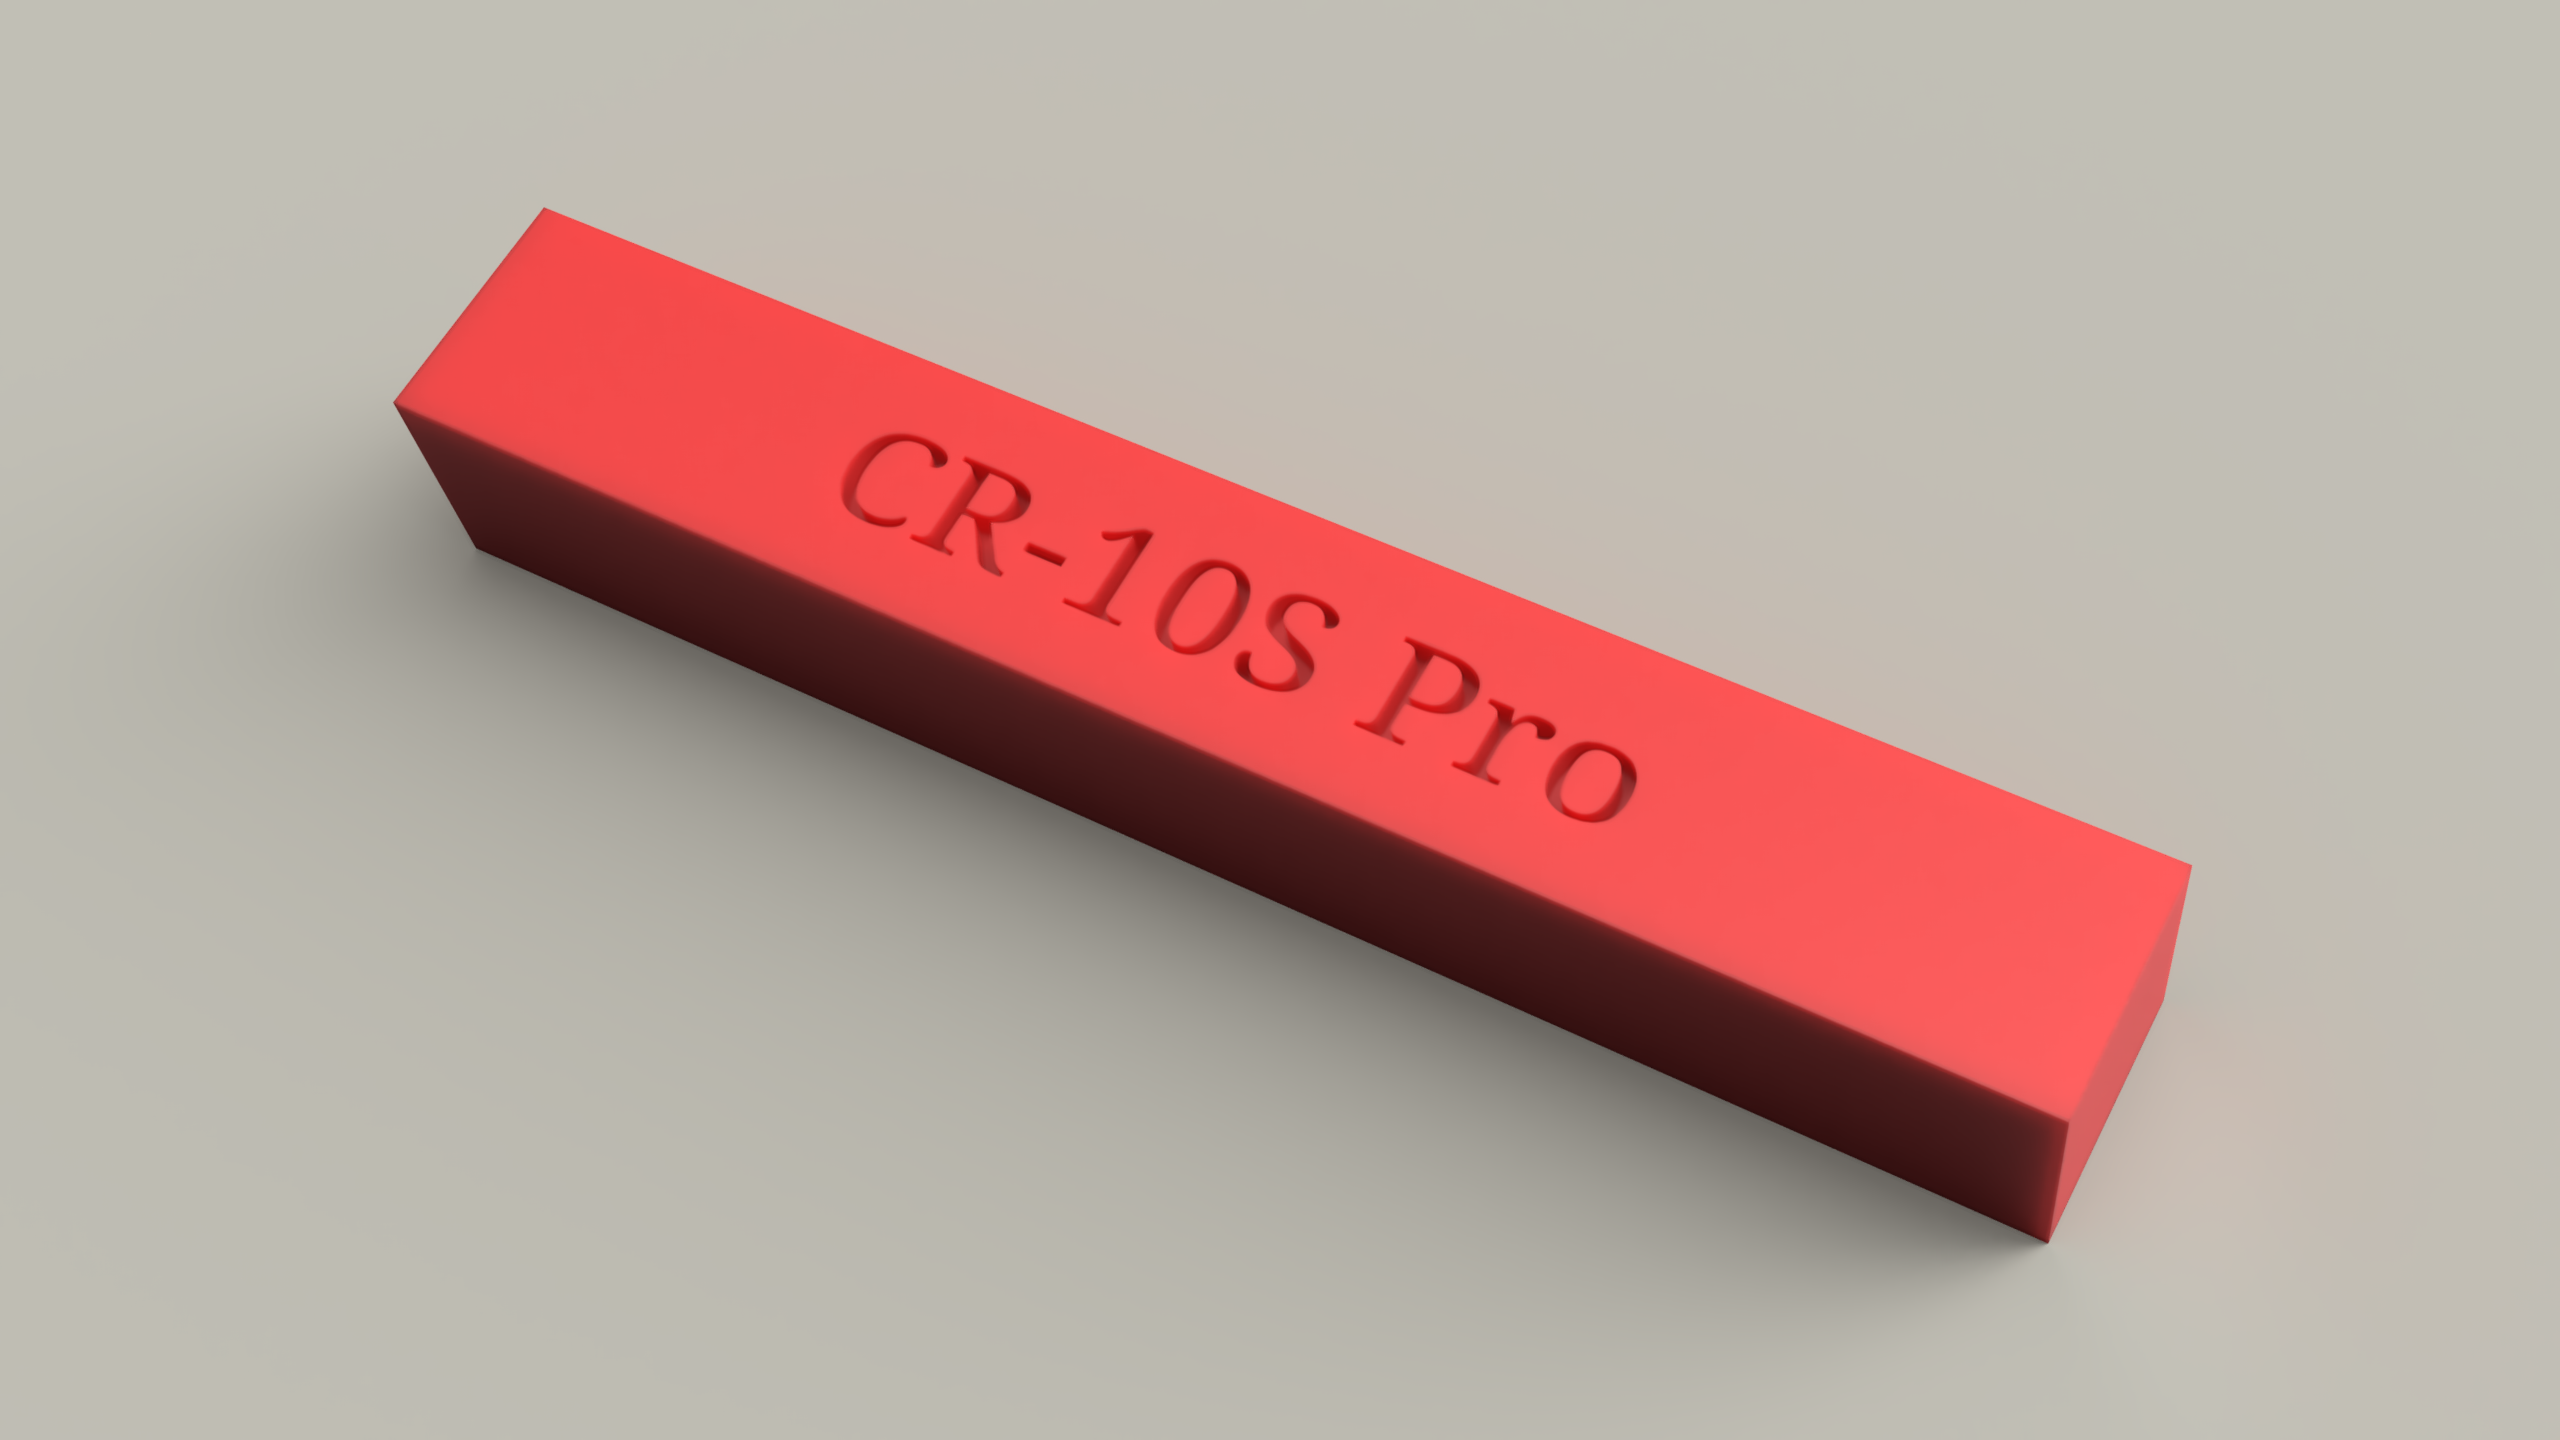 Cr-10s Pro Gantry alignment tool block